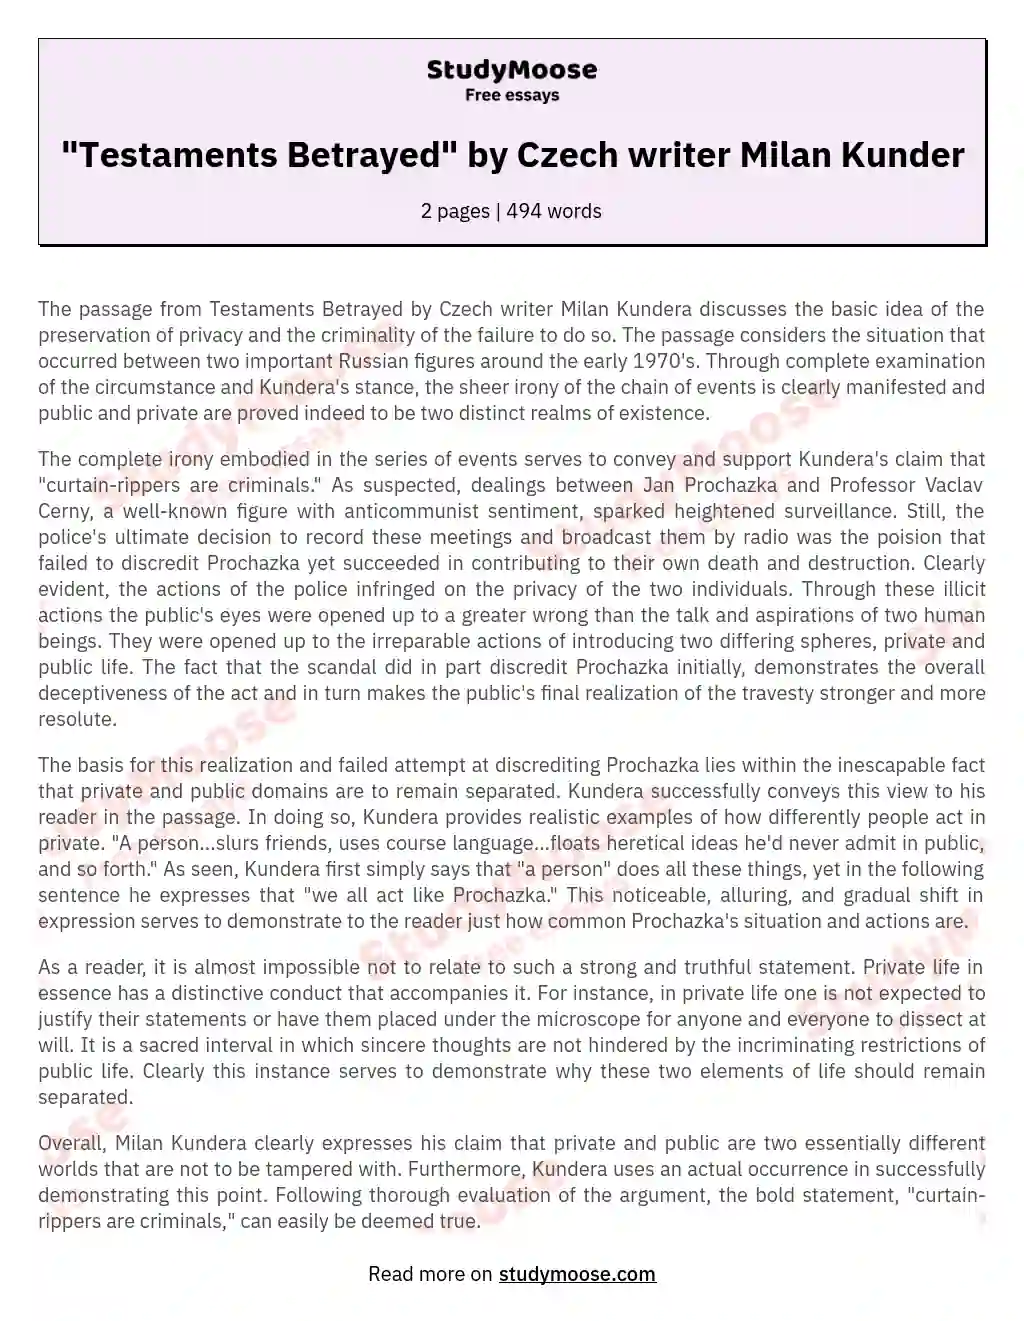 "Testaments Betrayed" by Czech writer Milan Kunder